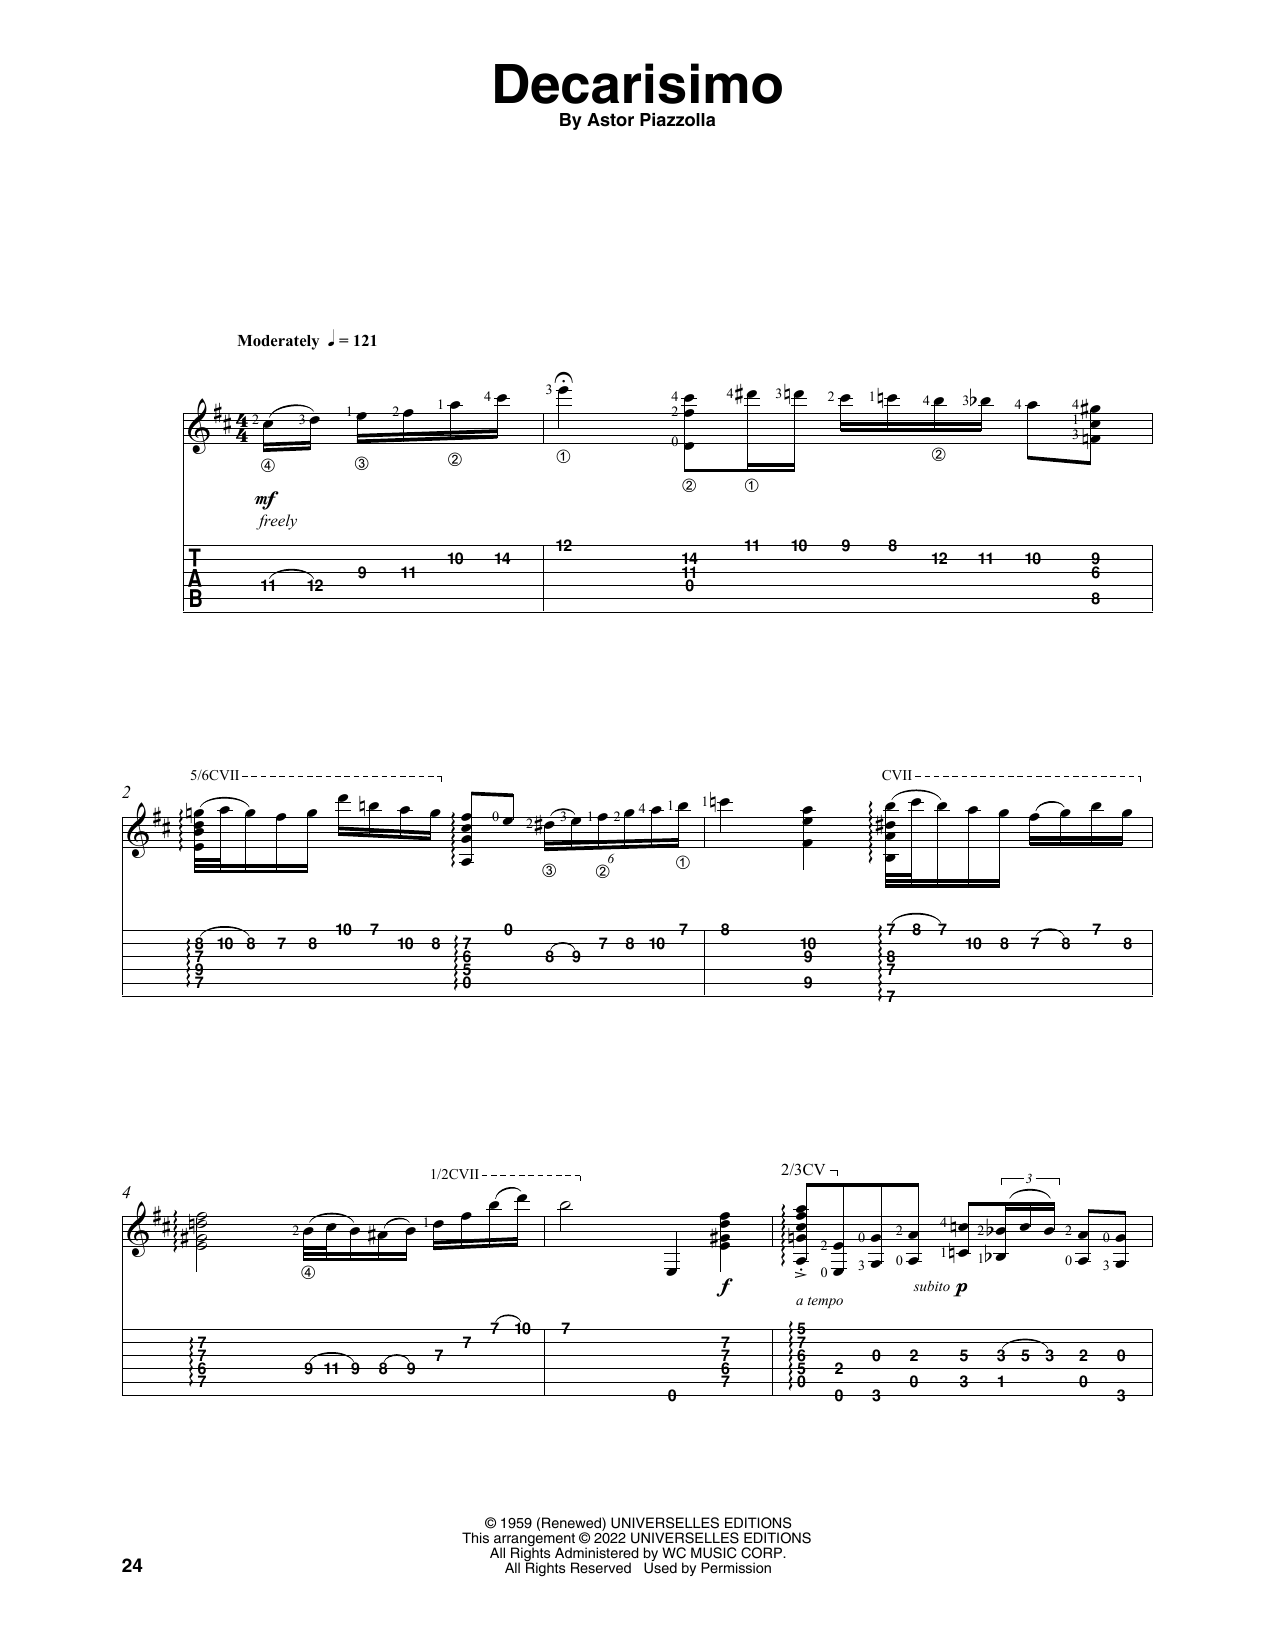 Astor Piazzolla Decarisimo (arr. Celil Refik Kaya) Sheet Music Notes & Chords for Solo Guitar - Download or Print PDF